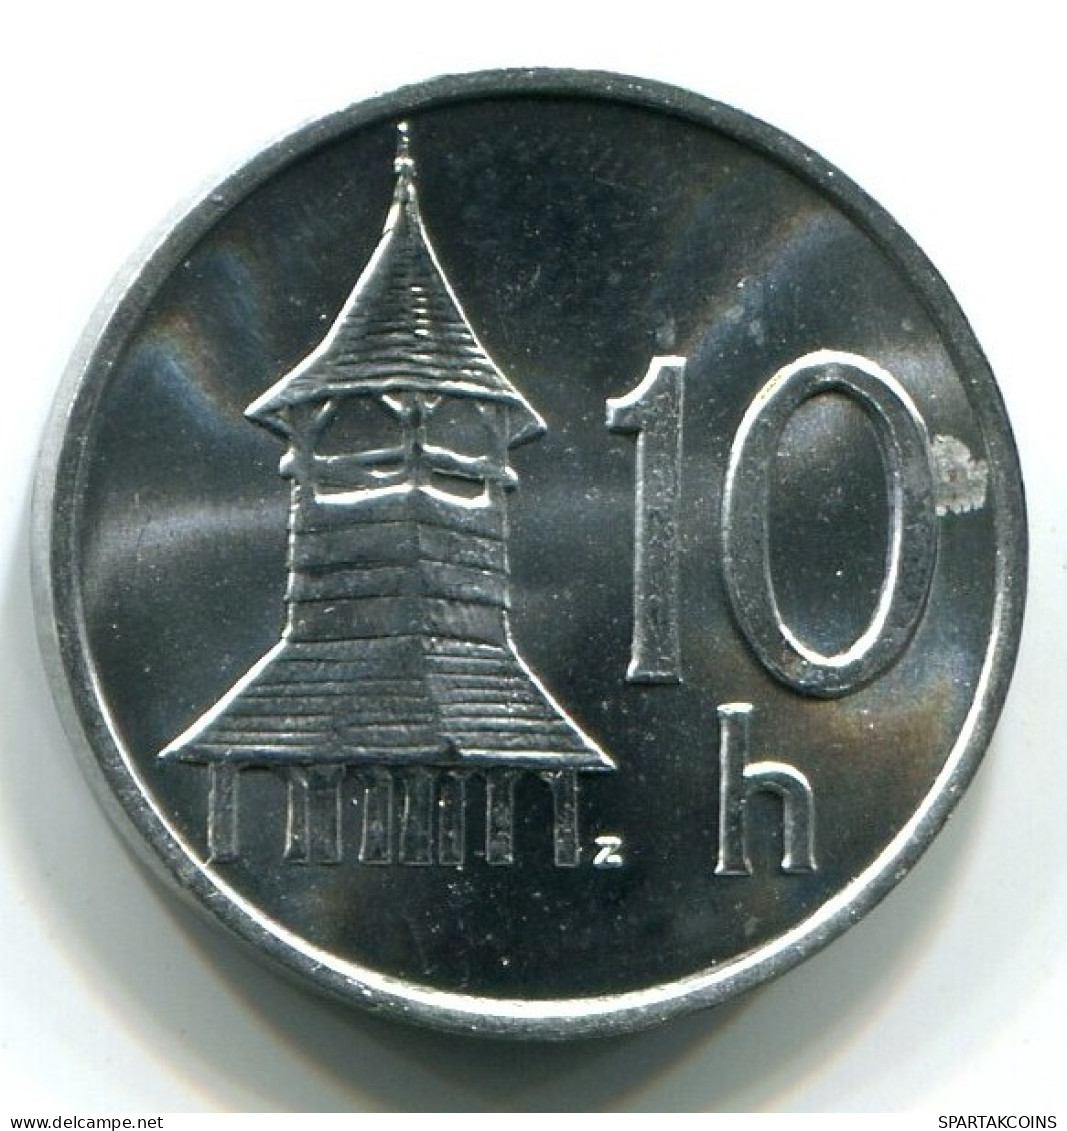 10 HELLERS 1993 SLOVAKIA UNC Coin #W10836.U.A - Slovaquie